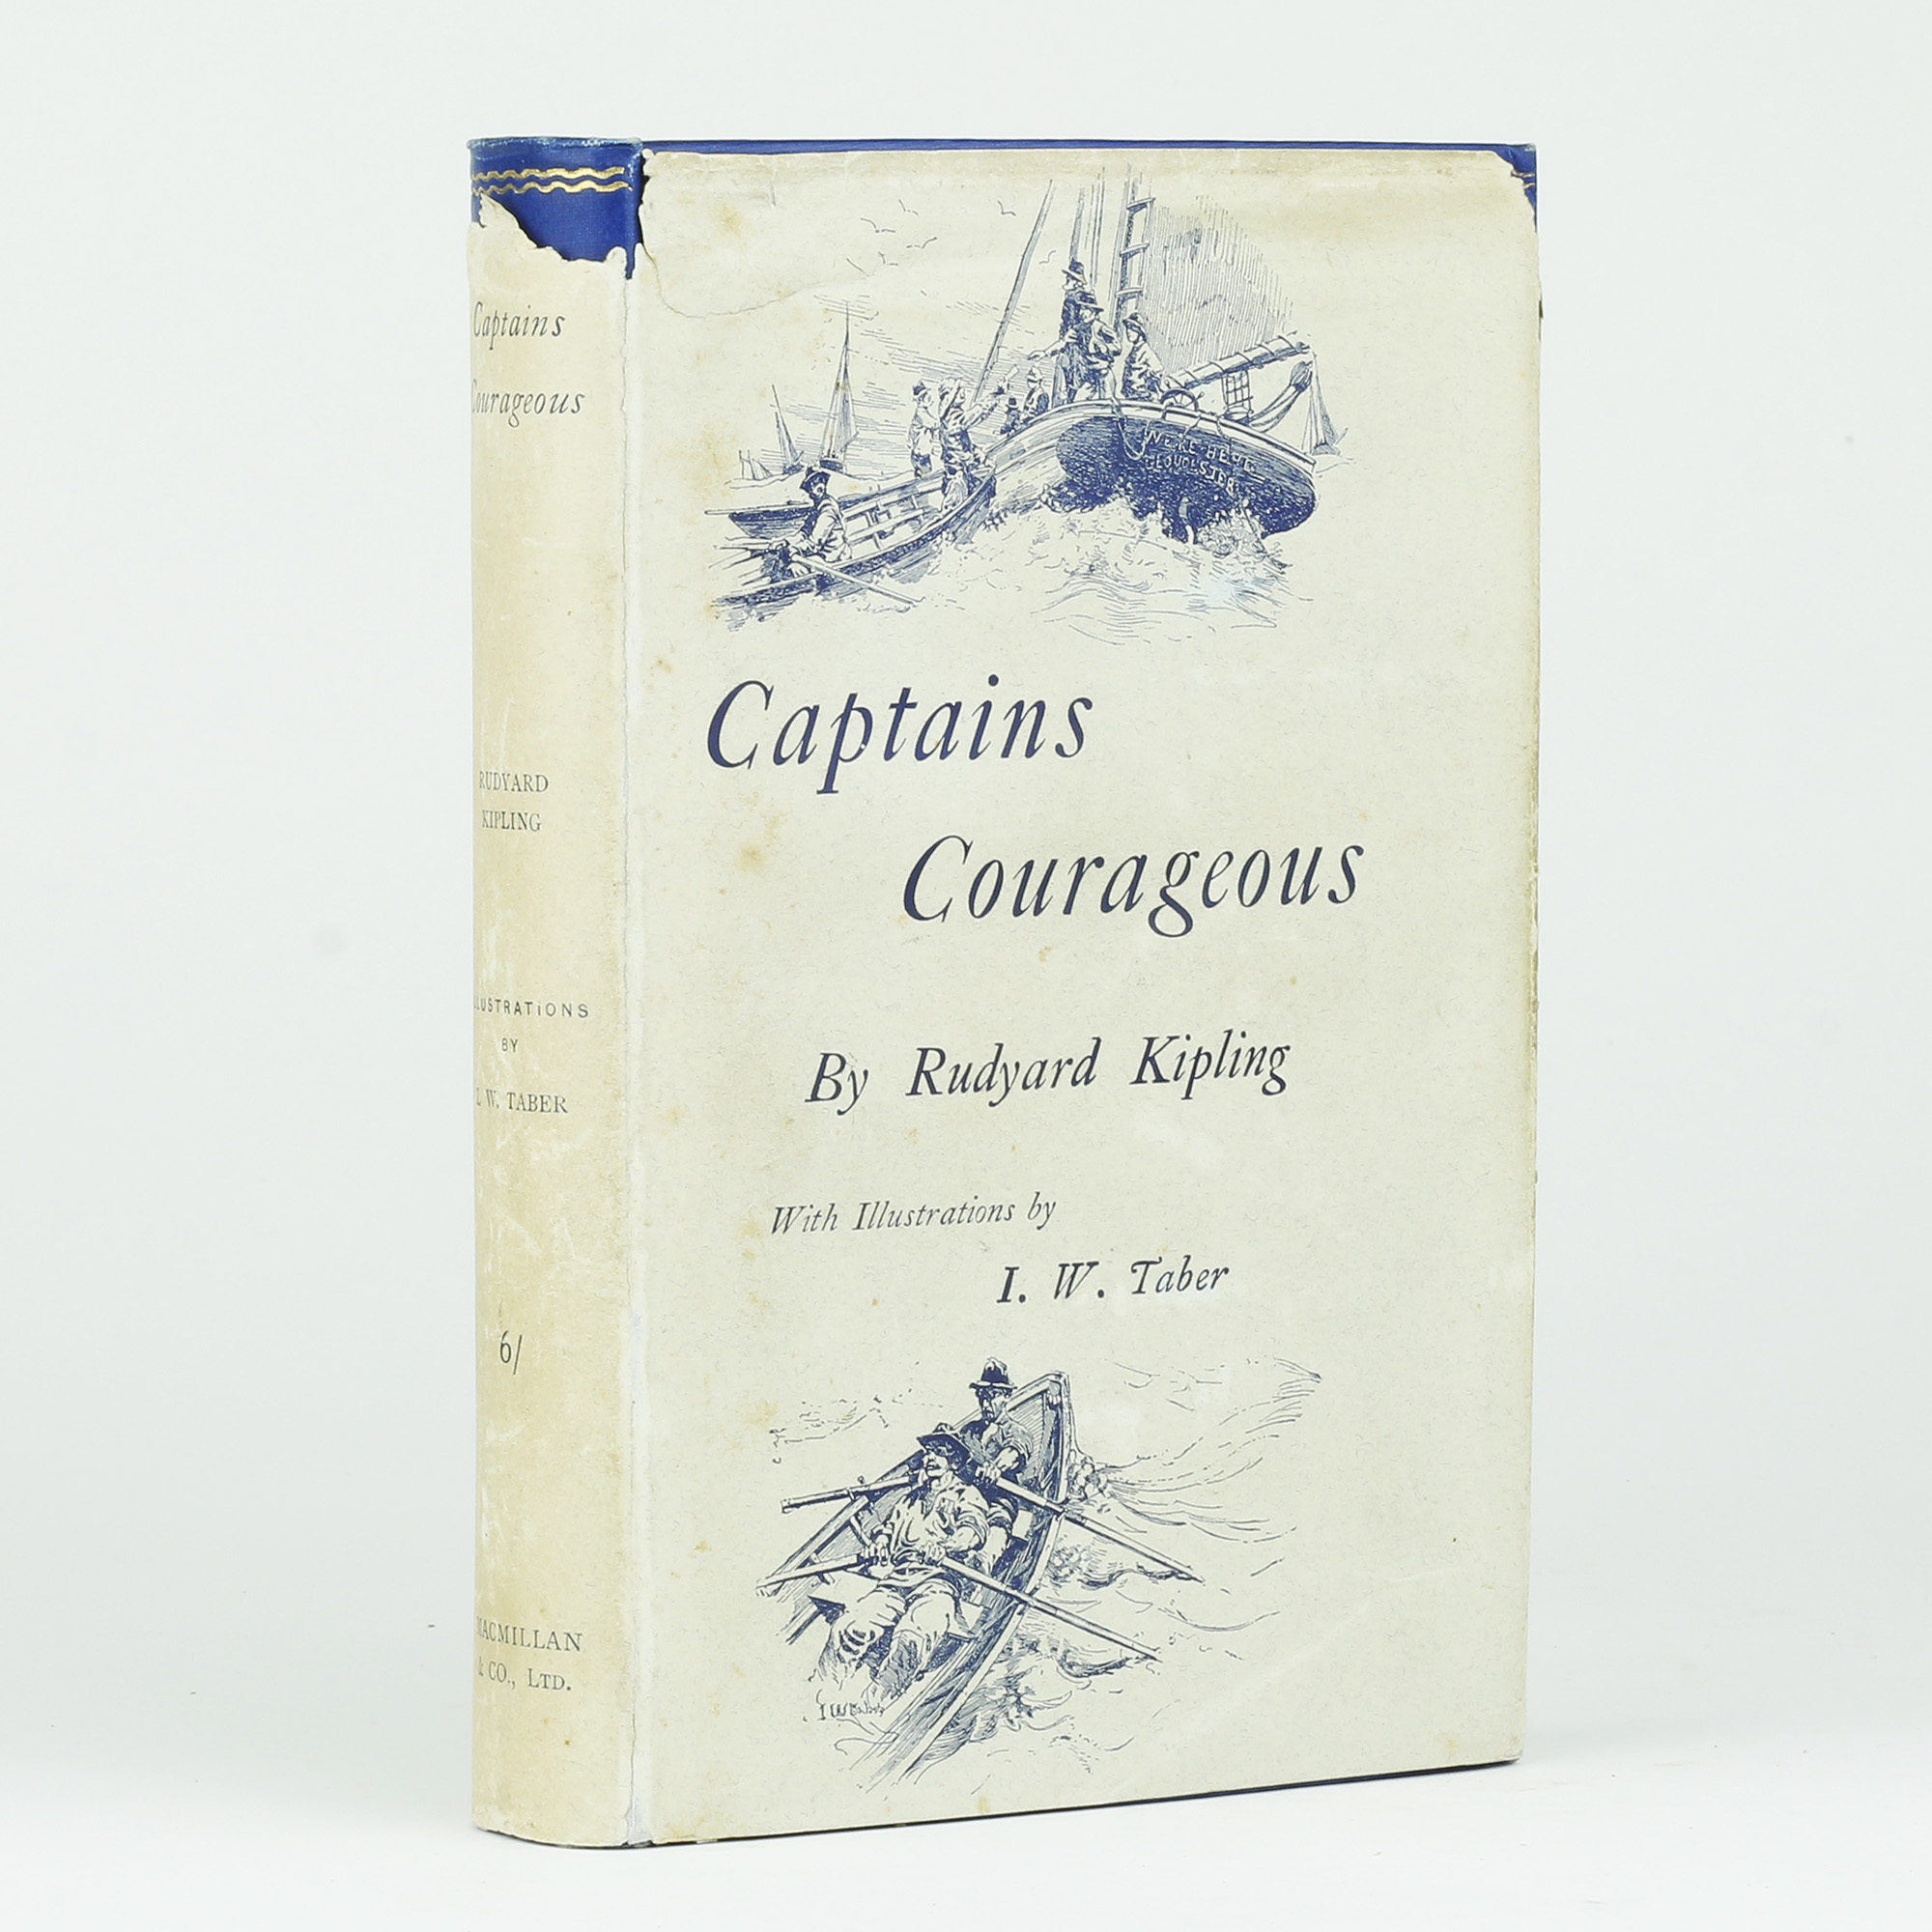 captains courageous book